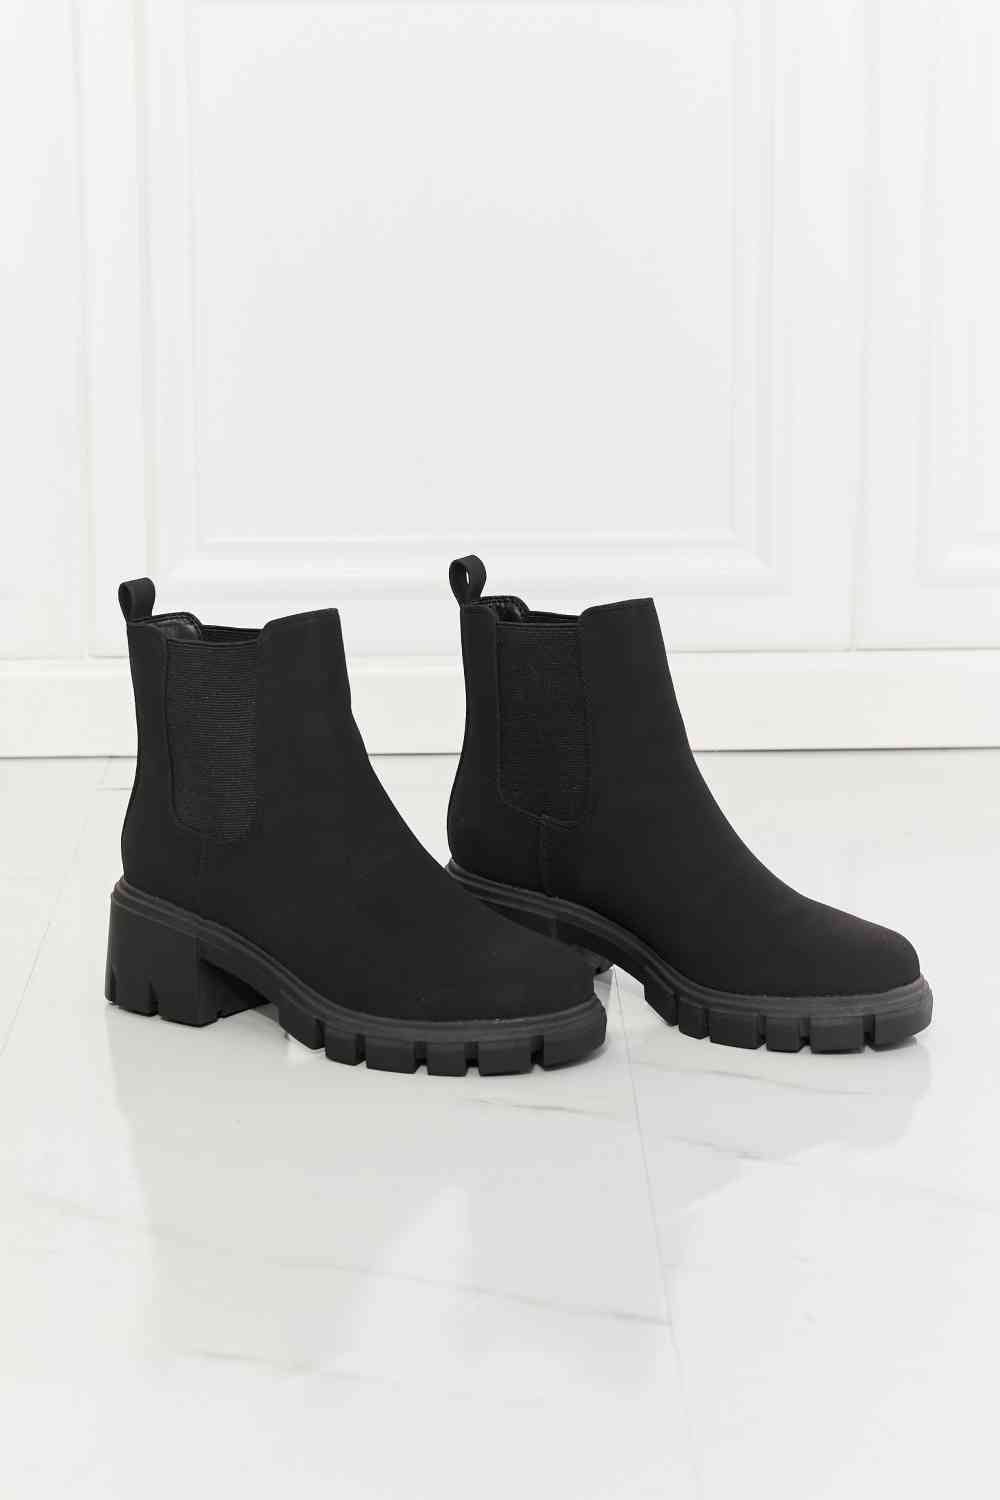 TEEK - Work For It Matte Lug Black Boots SHOES TEEK Trend   